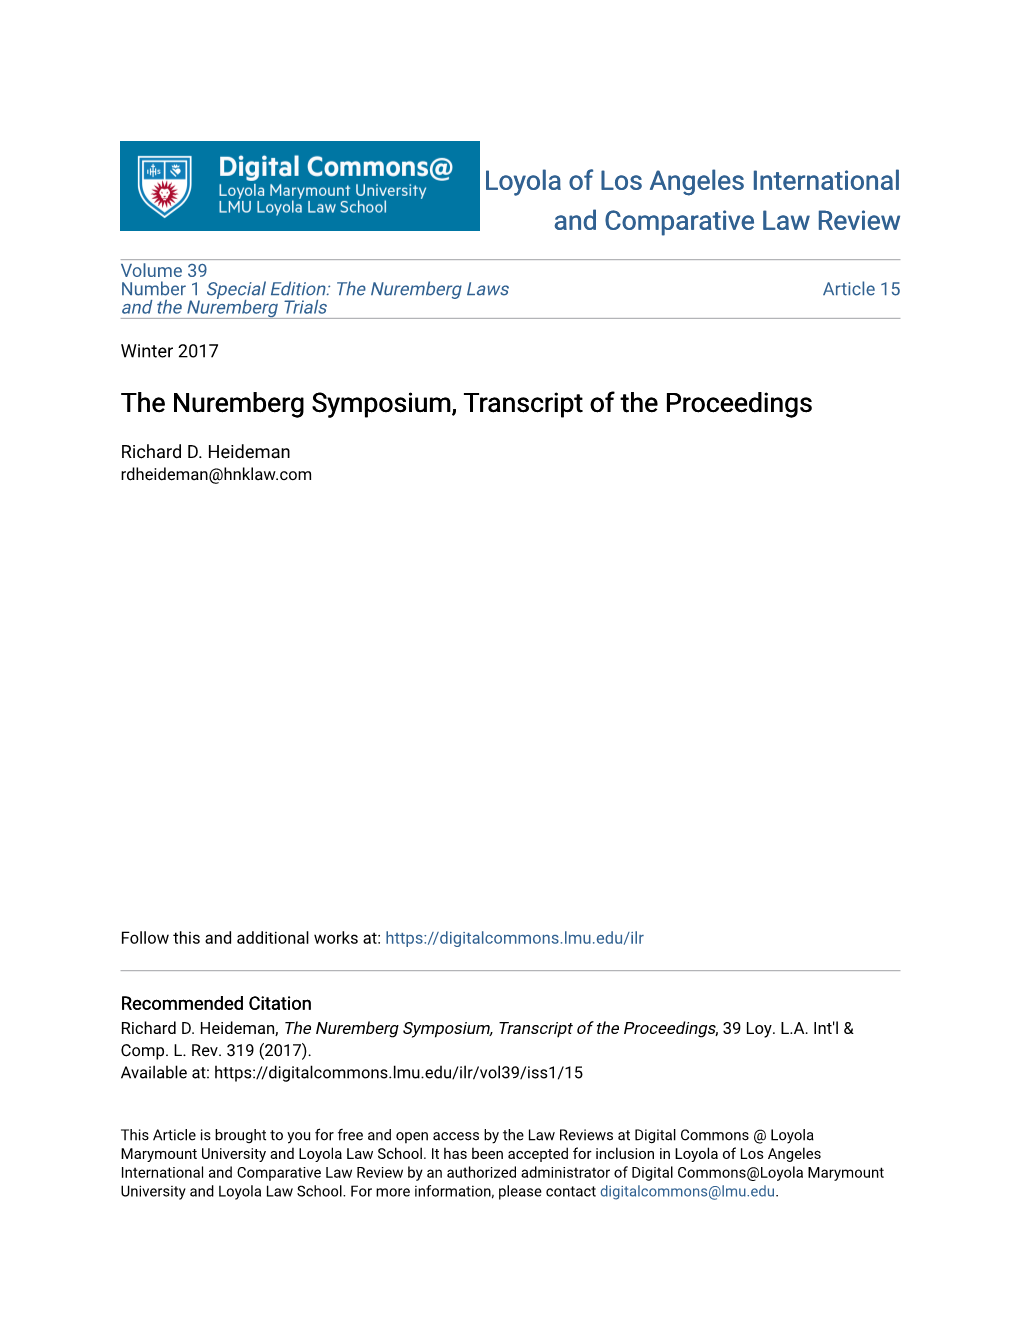 The Nuremberg Symposium, Transcript of the Proceedings